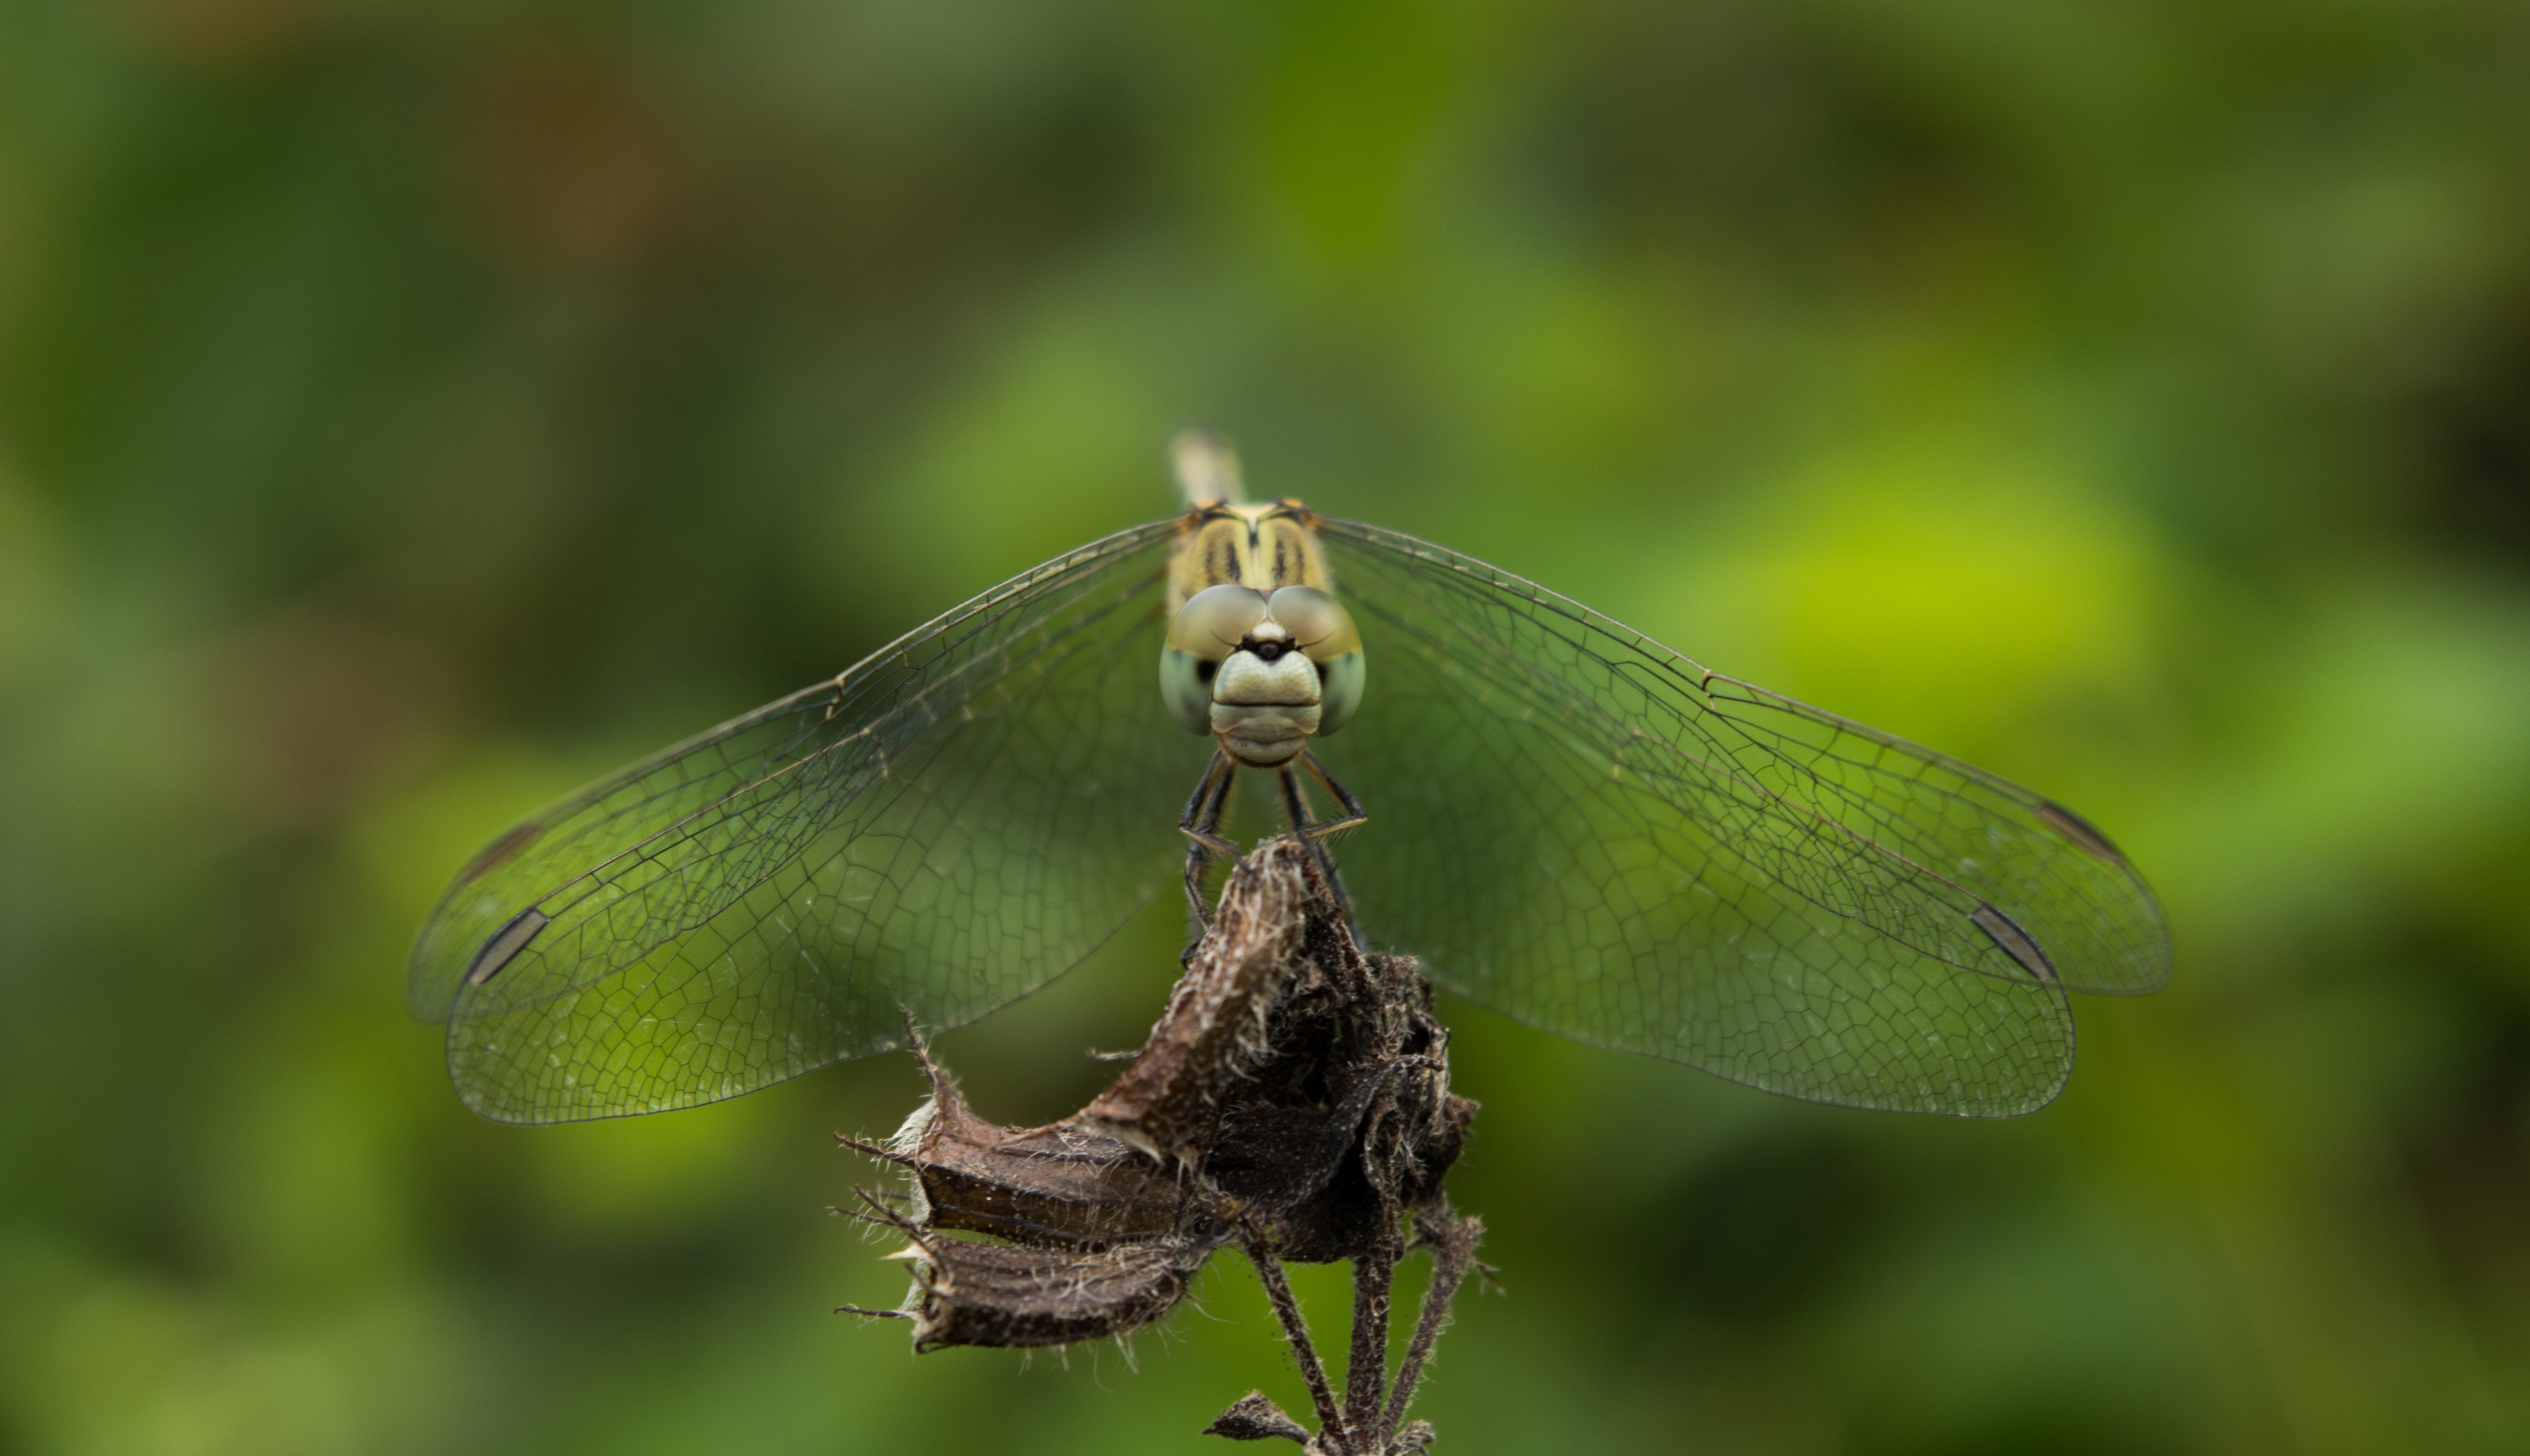 Orthetrum genus dragonfly